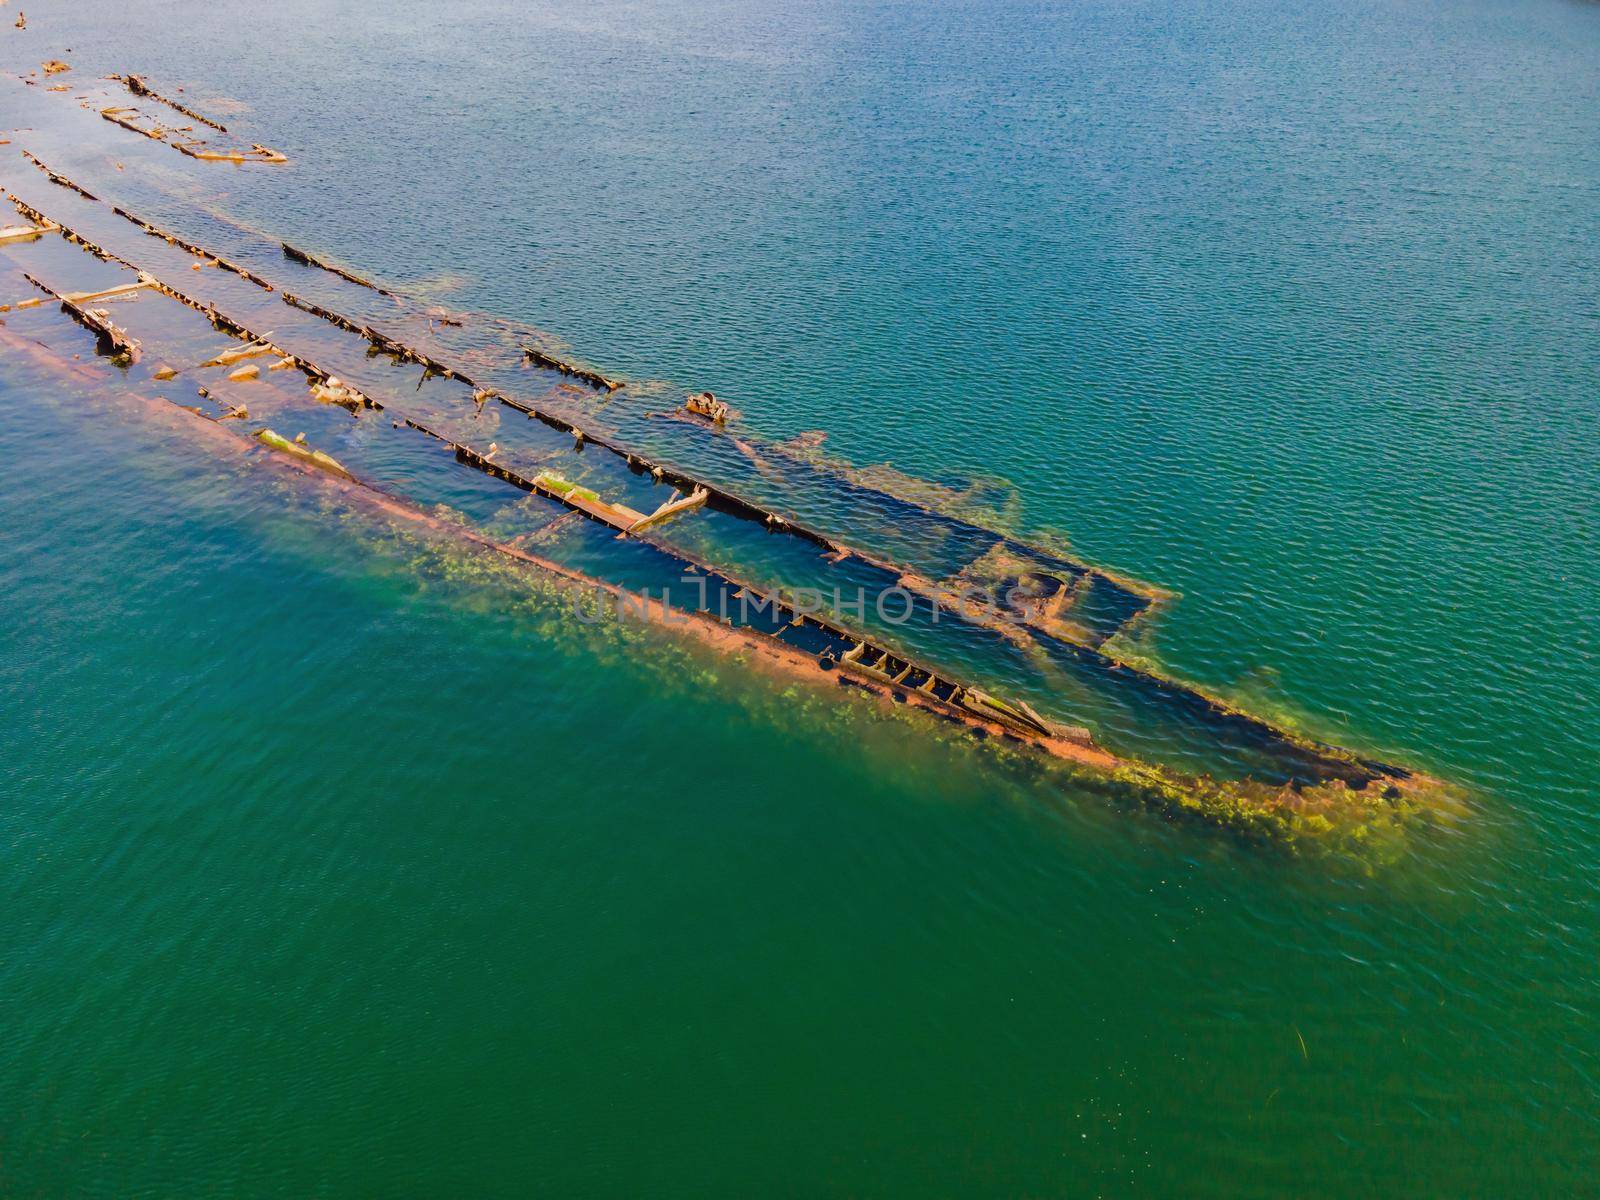 Abandoned broken shipwreck sticking out of the sea by galitskaya